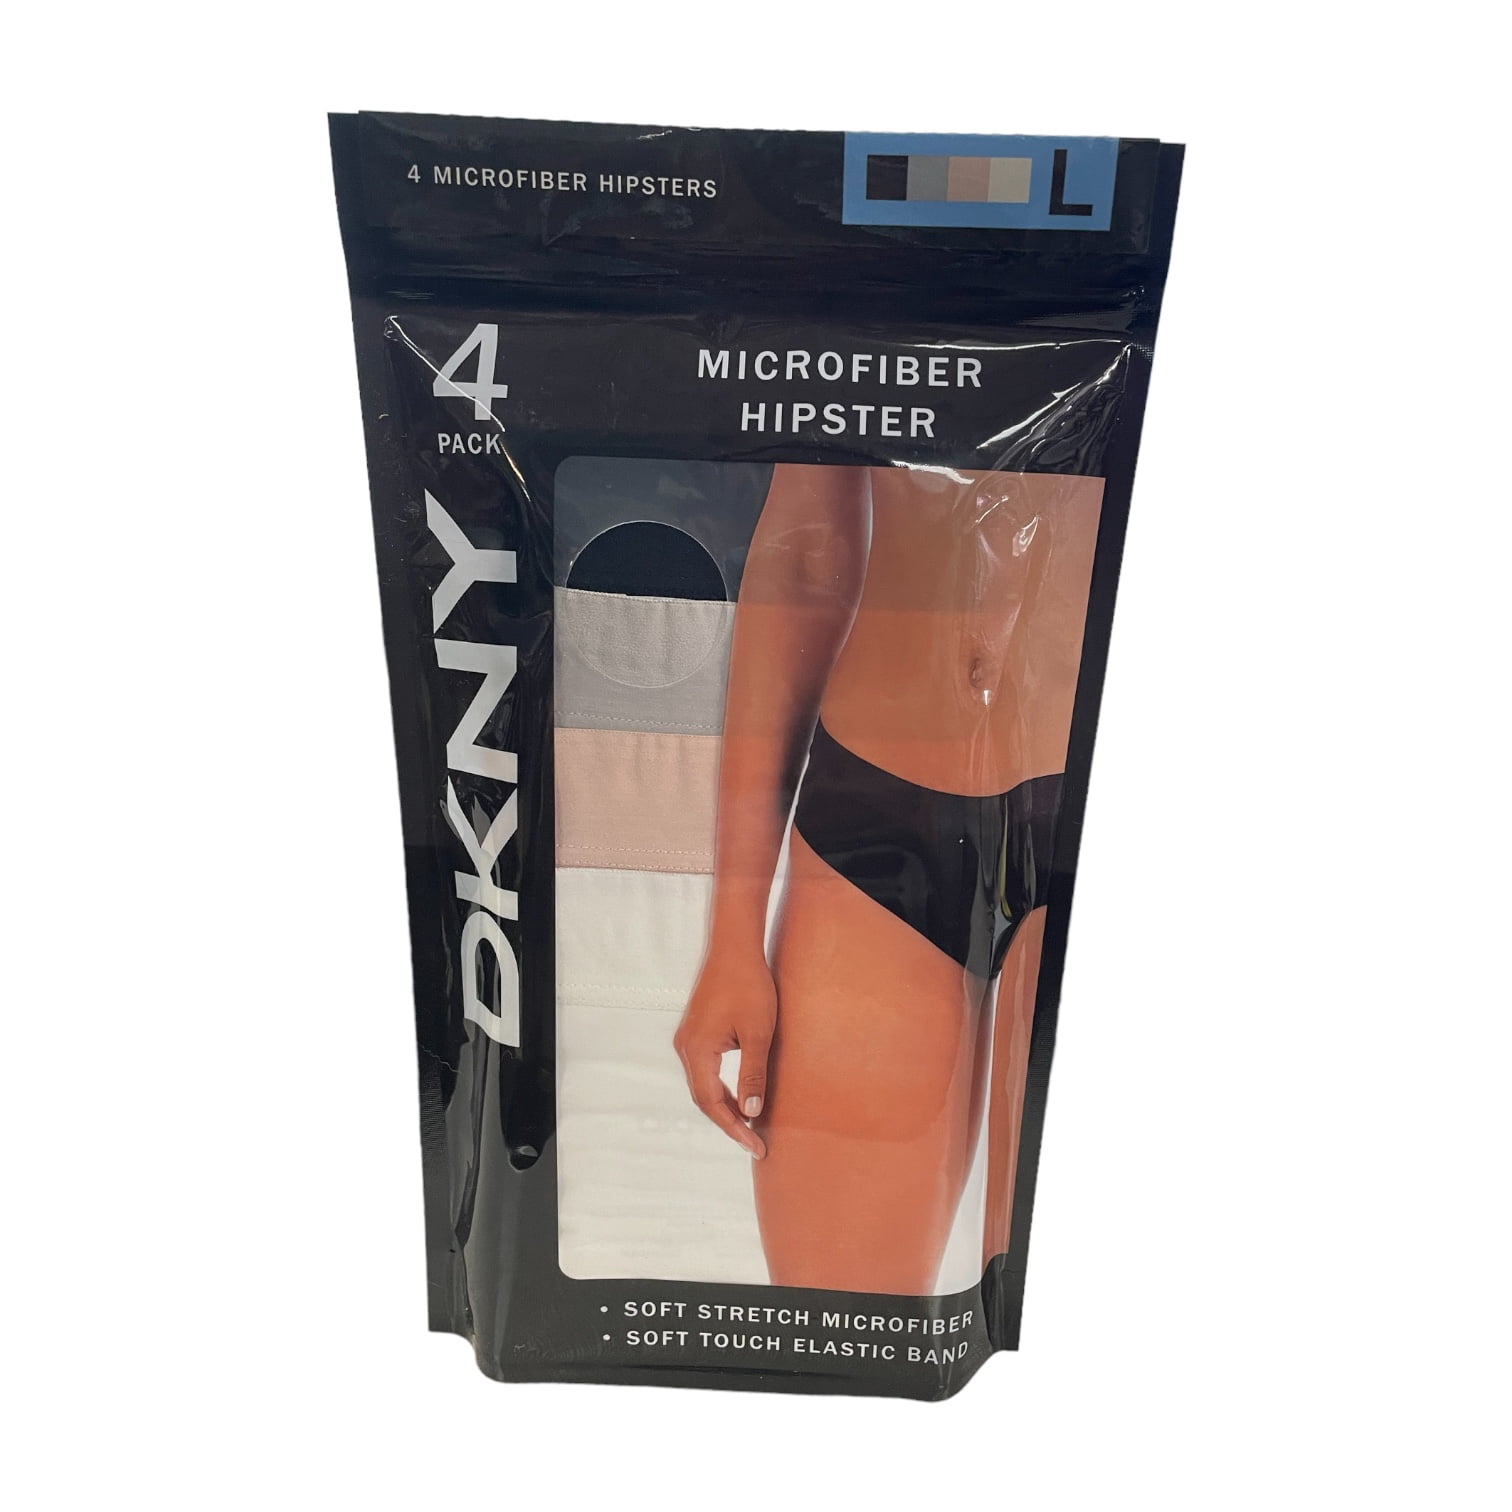 DKNY Women's Soft Stretch Microfiber 4 Pack Hipster Underwear (Ink